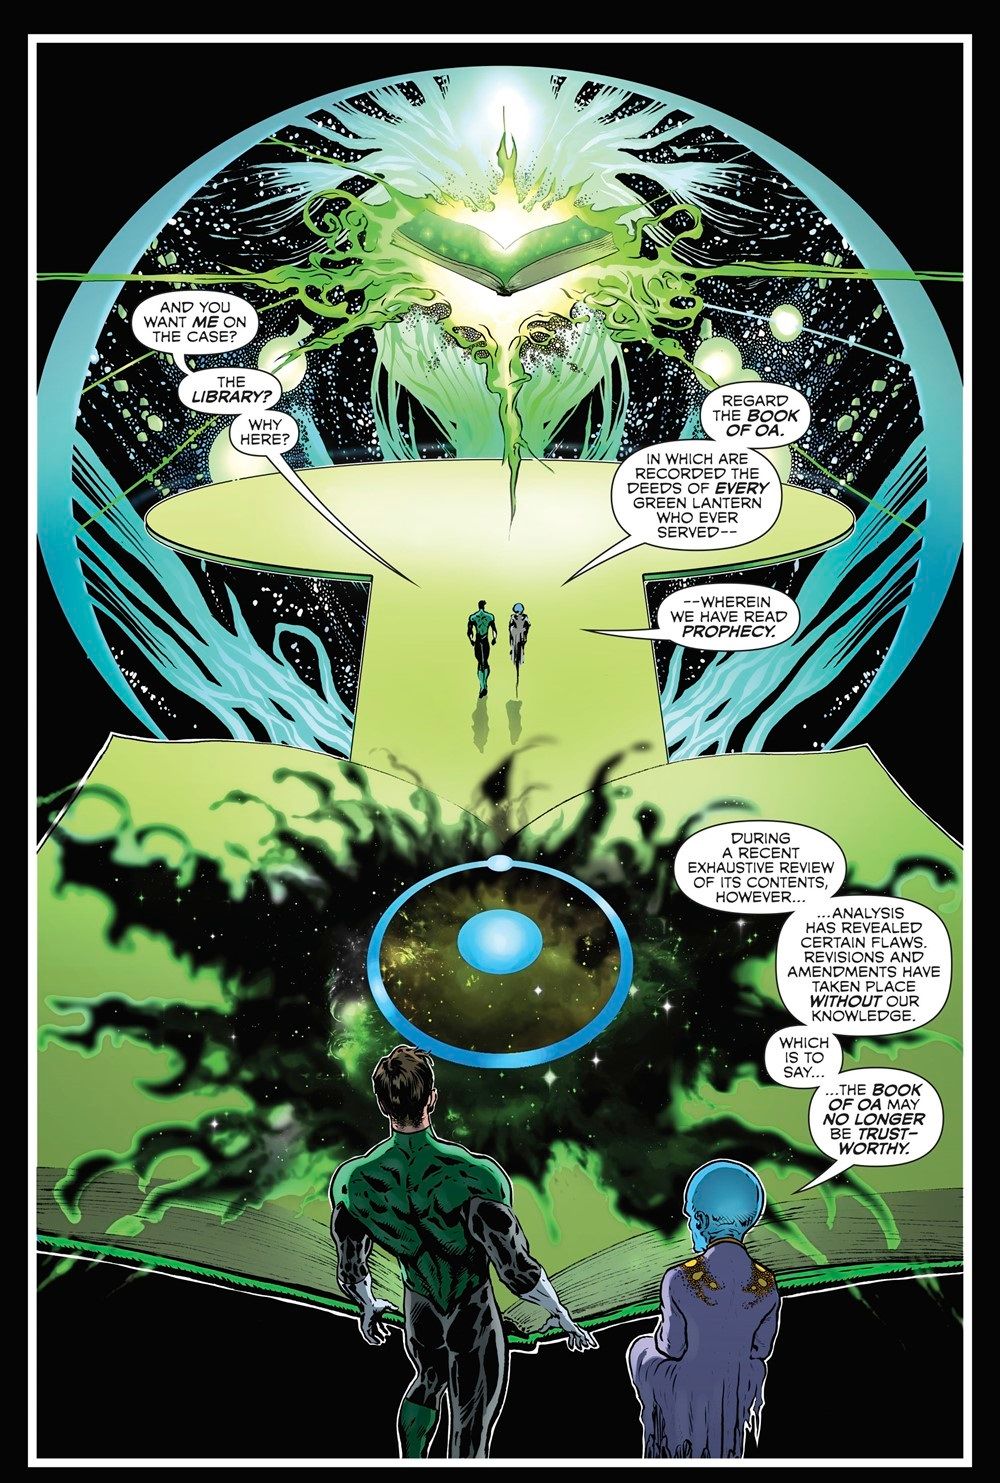 The Green Lantern Doctor Manhattan Book of Oa